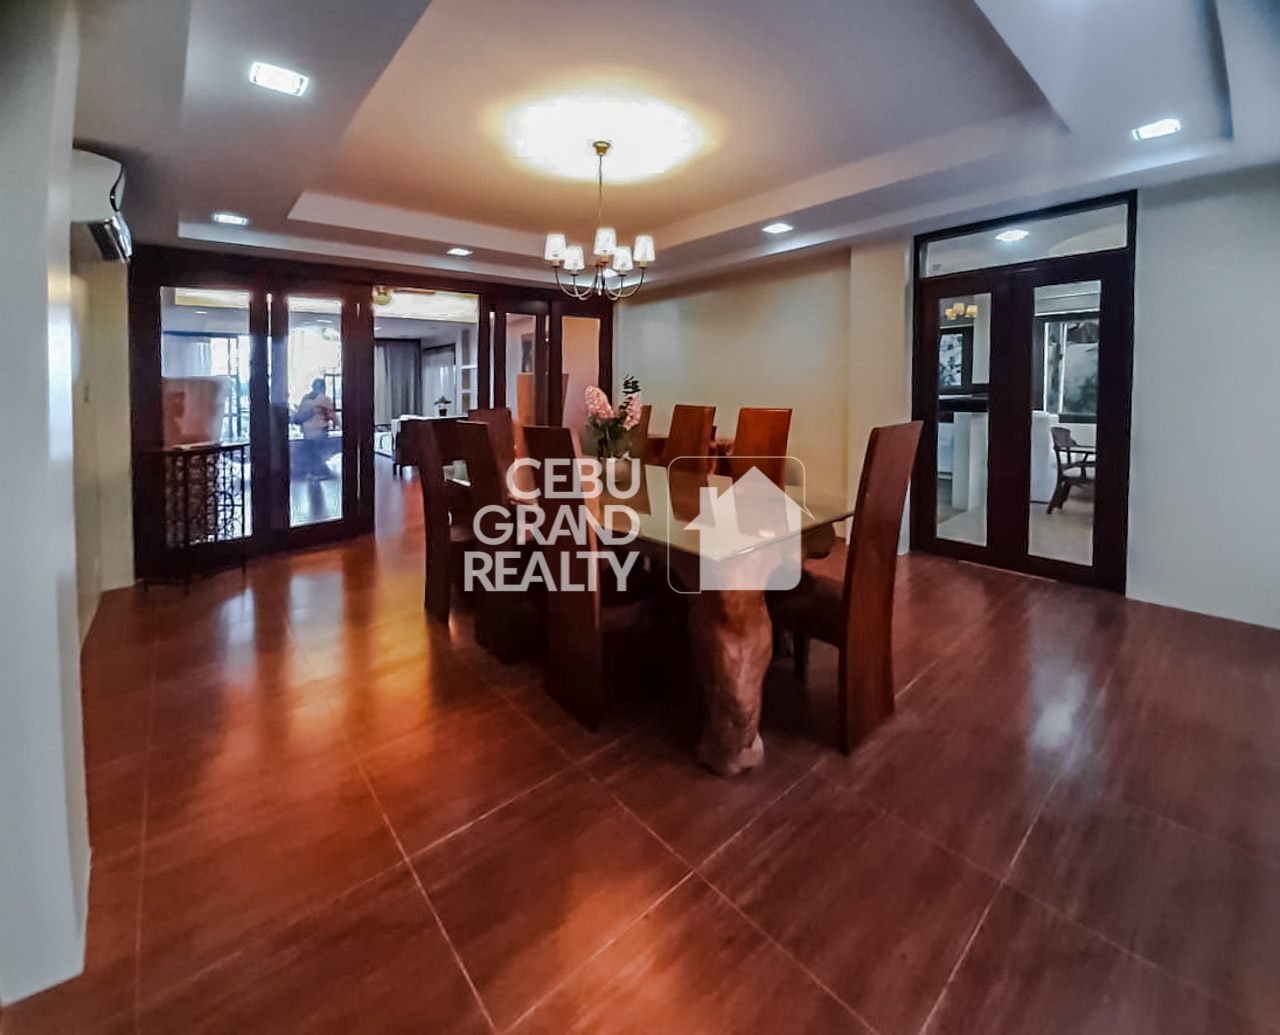 SRBAM3 6 Bedroom House for Sale in Amara Liloan - Cebu Grand Realty (6)